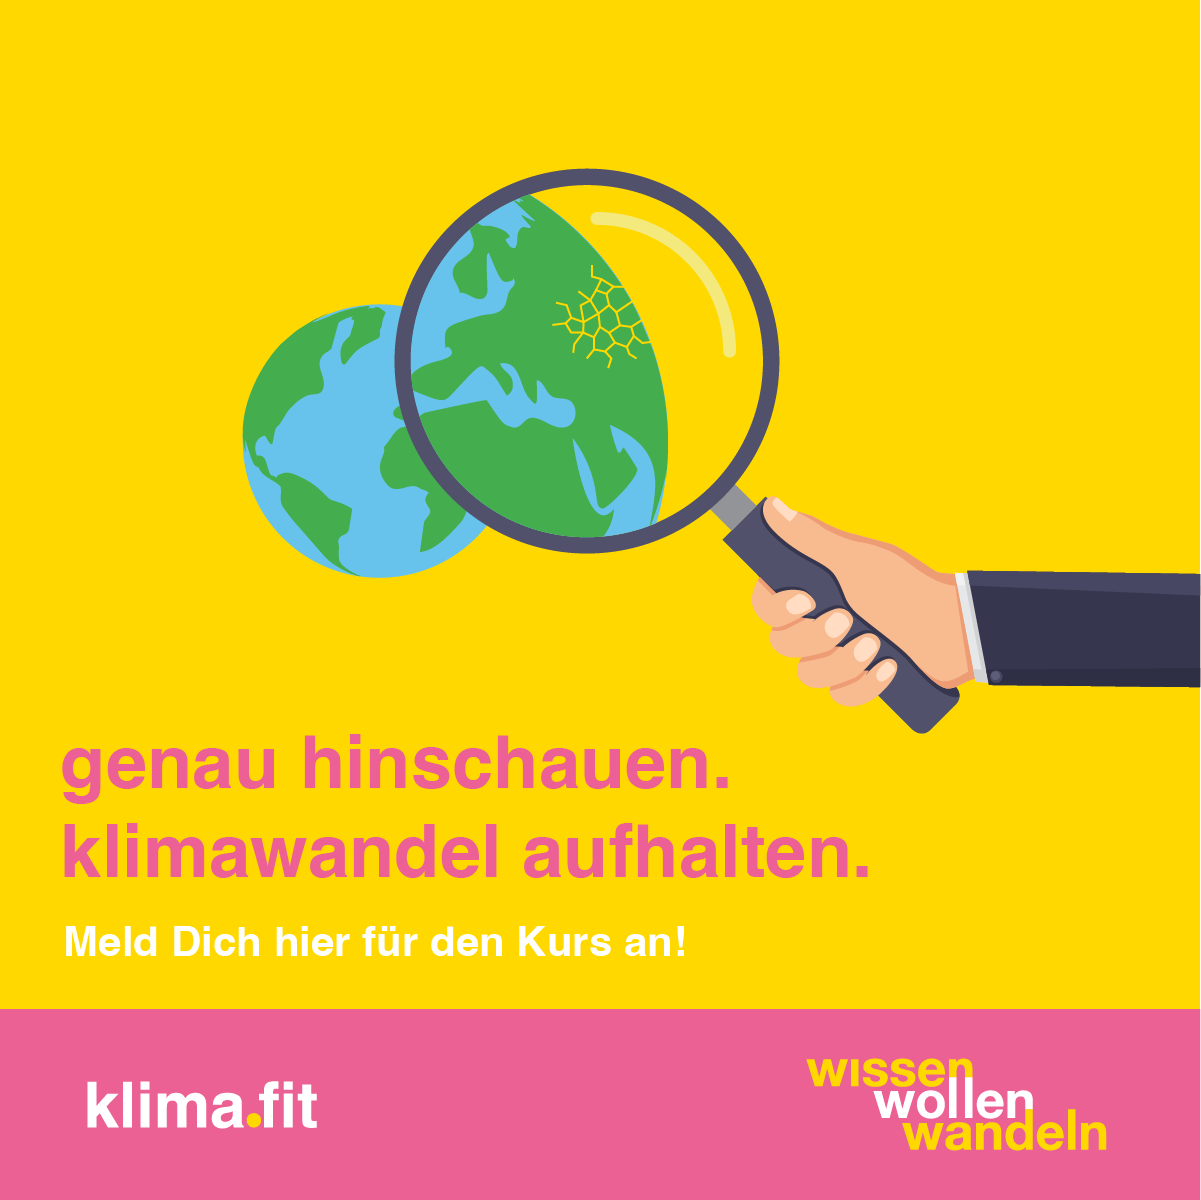 "Klimafit"-Kurs startet erneut ab April an der Volkshochschule Stuttgart